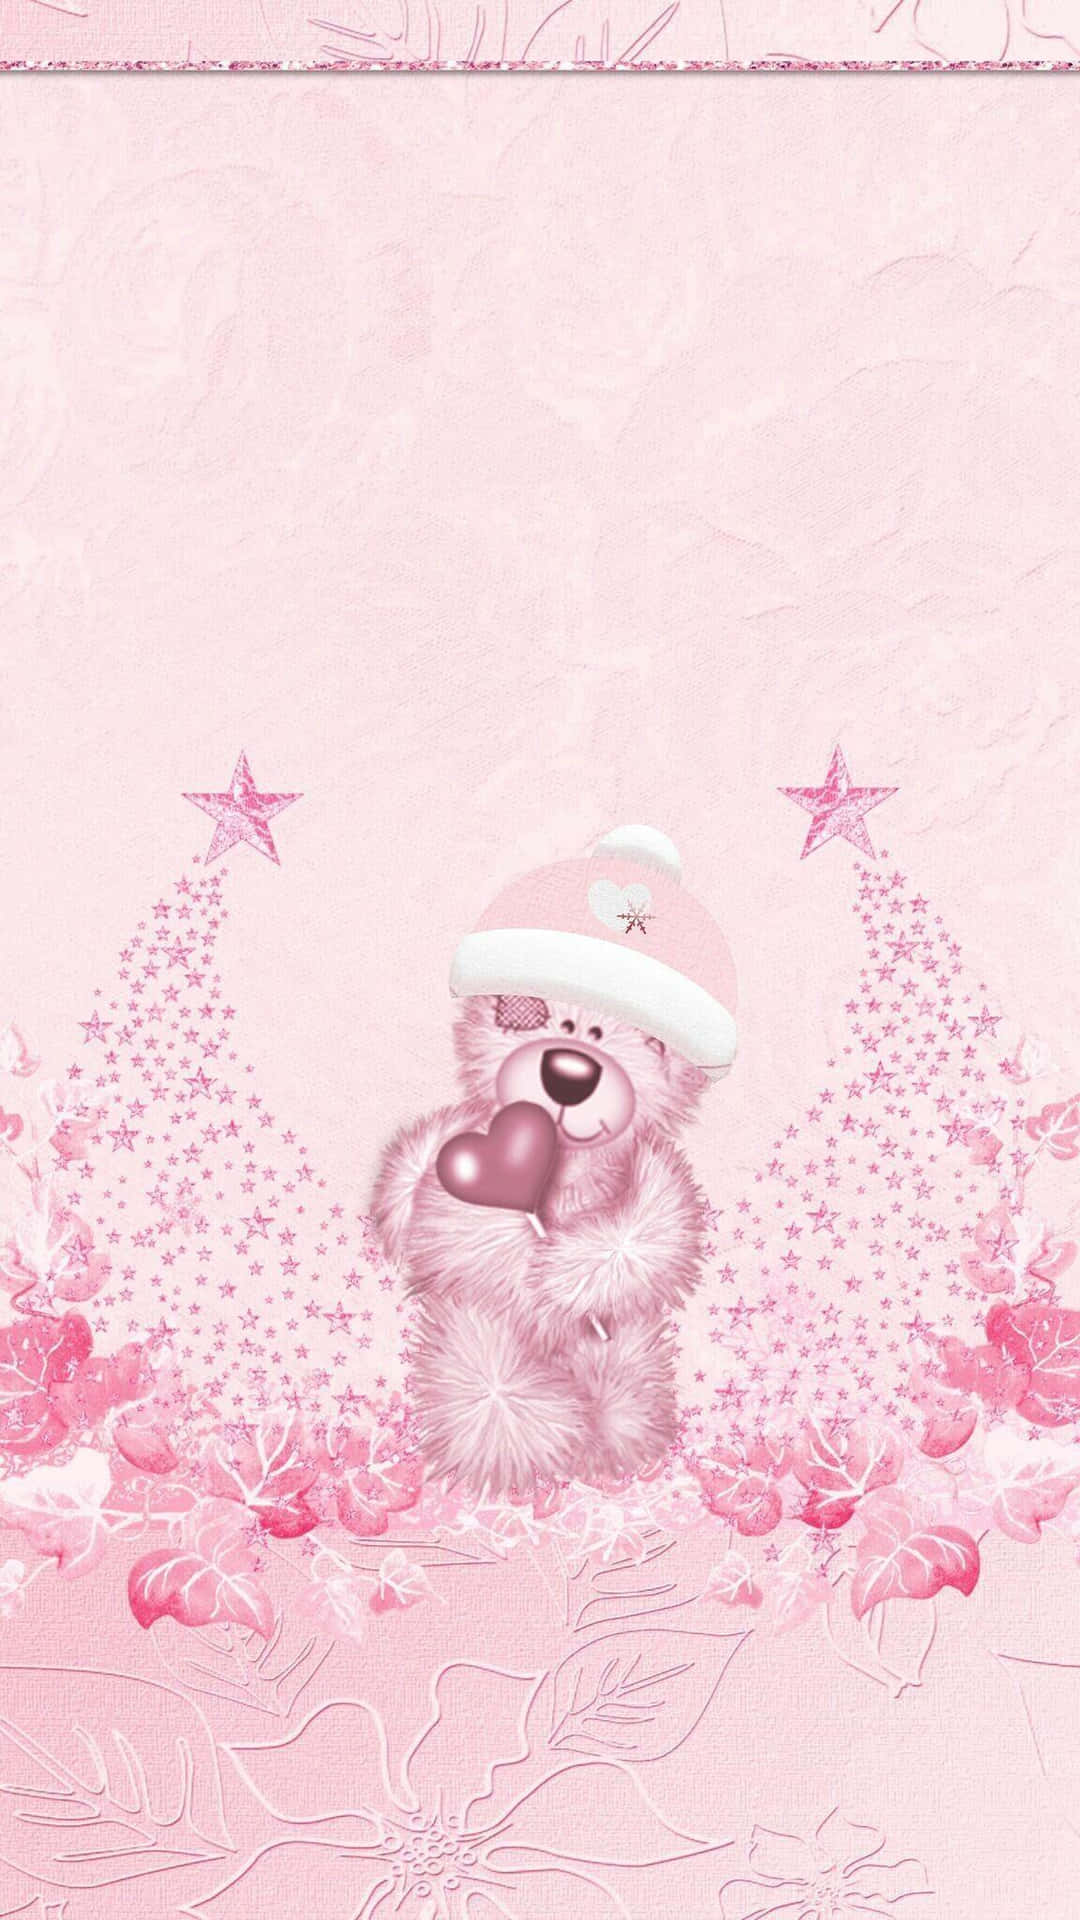 An adorable pink Christmas decoration Wallpaper